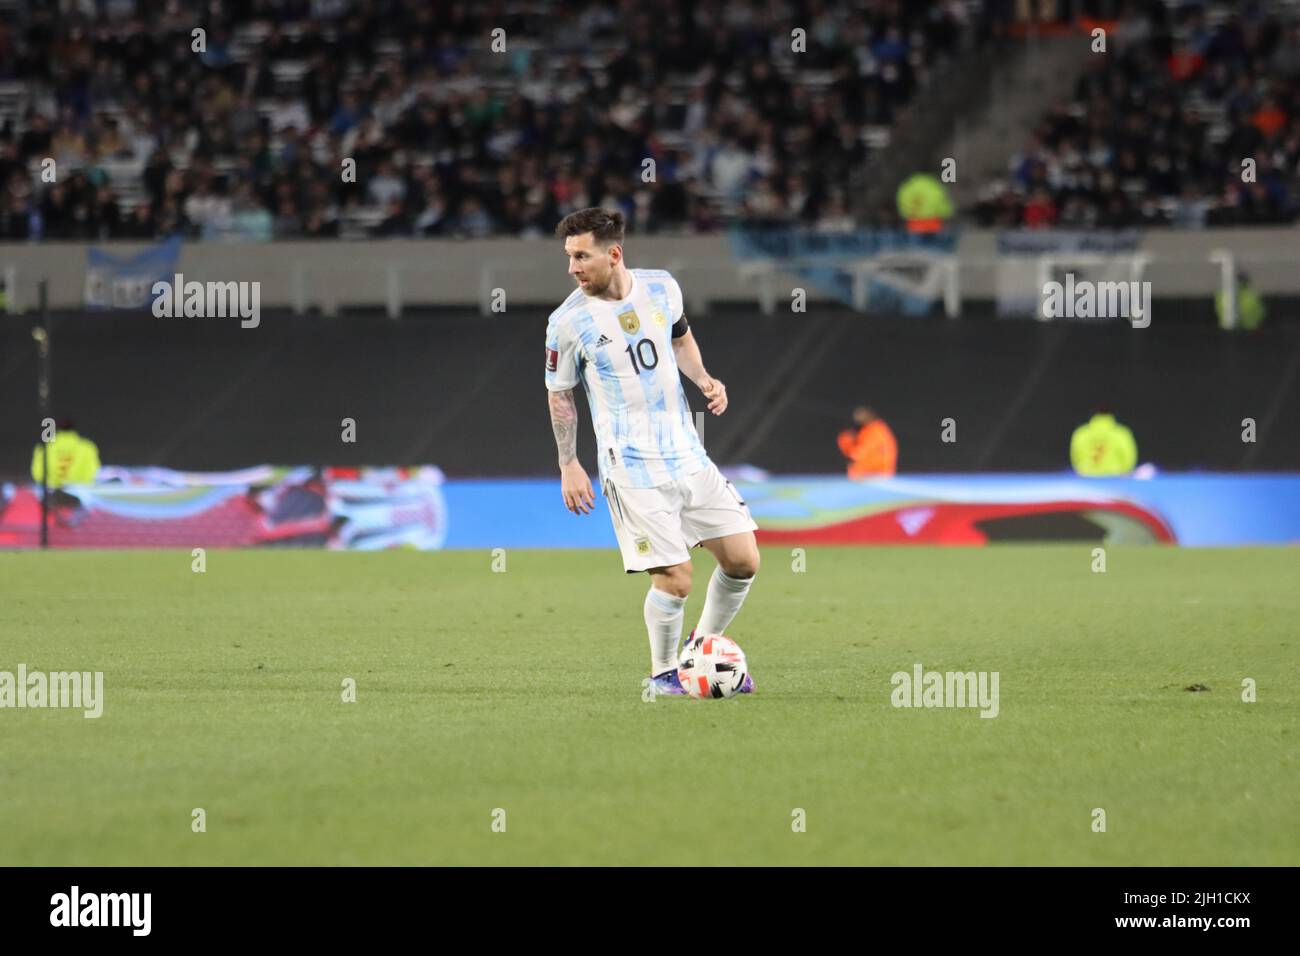 Buenos Aires; 10 de octubre de 2021: Eliminatory Qatar 2022, Argentina vs Uruguay, Messi think with the ball. Stock Photo